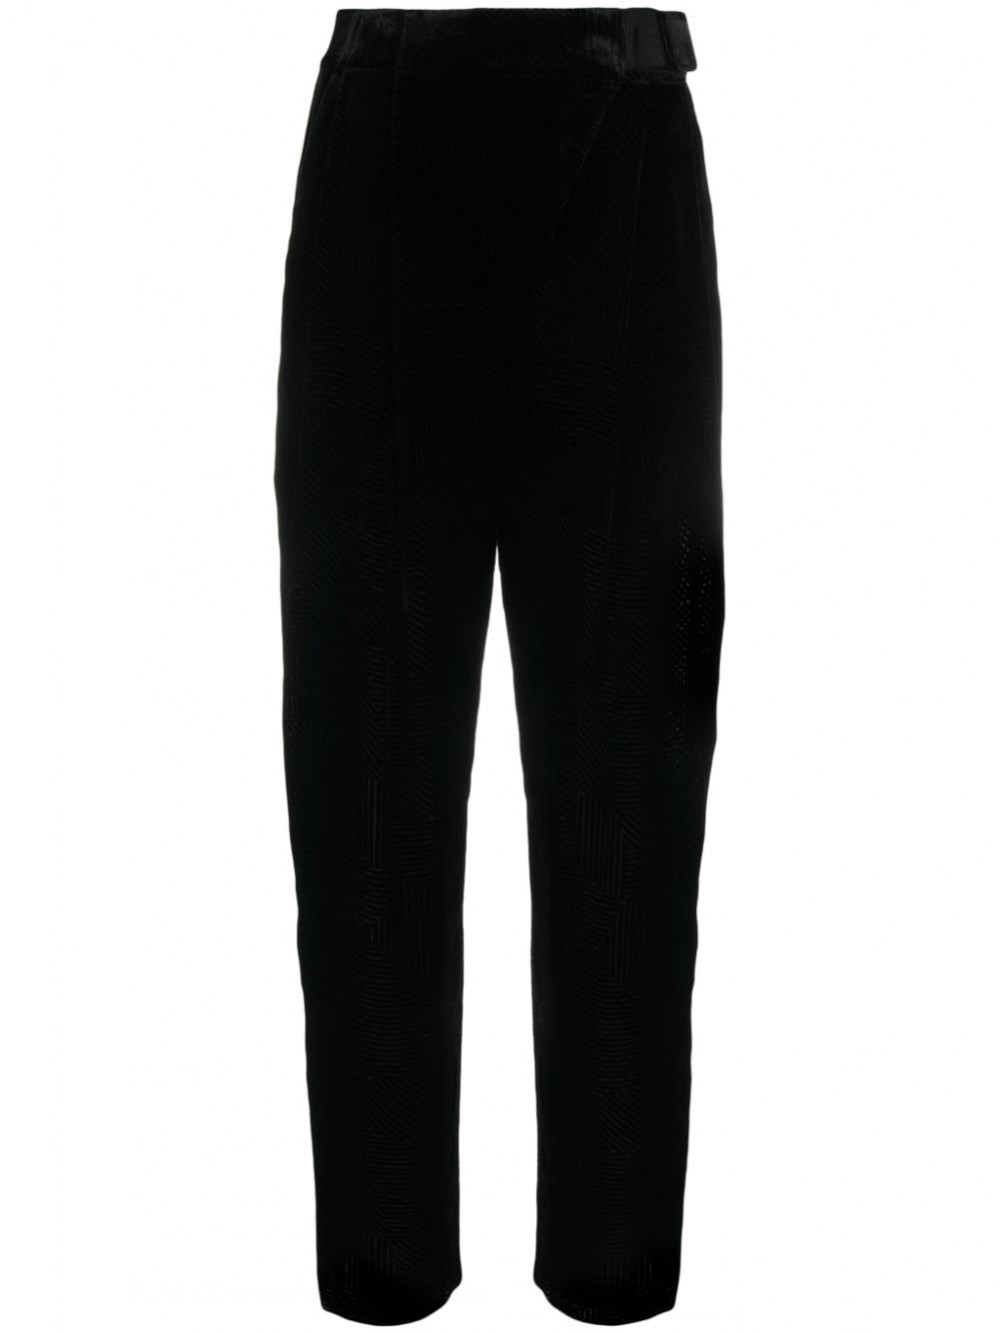 Emporio Armani Black Pants Size 38 1371 | eBay